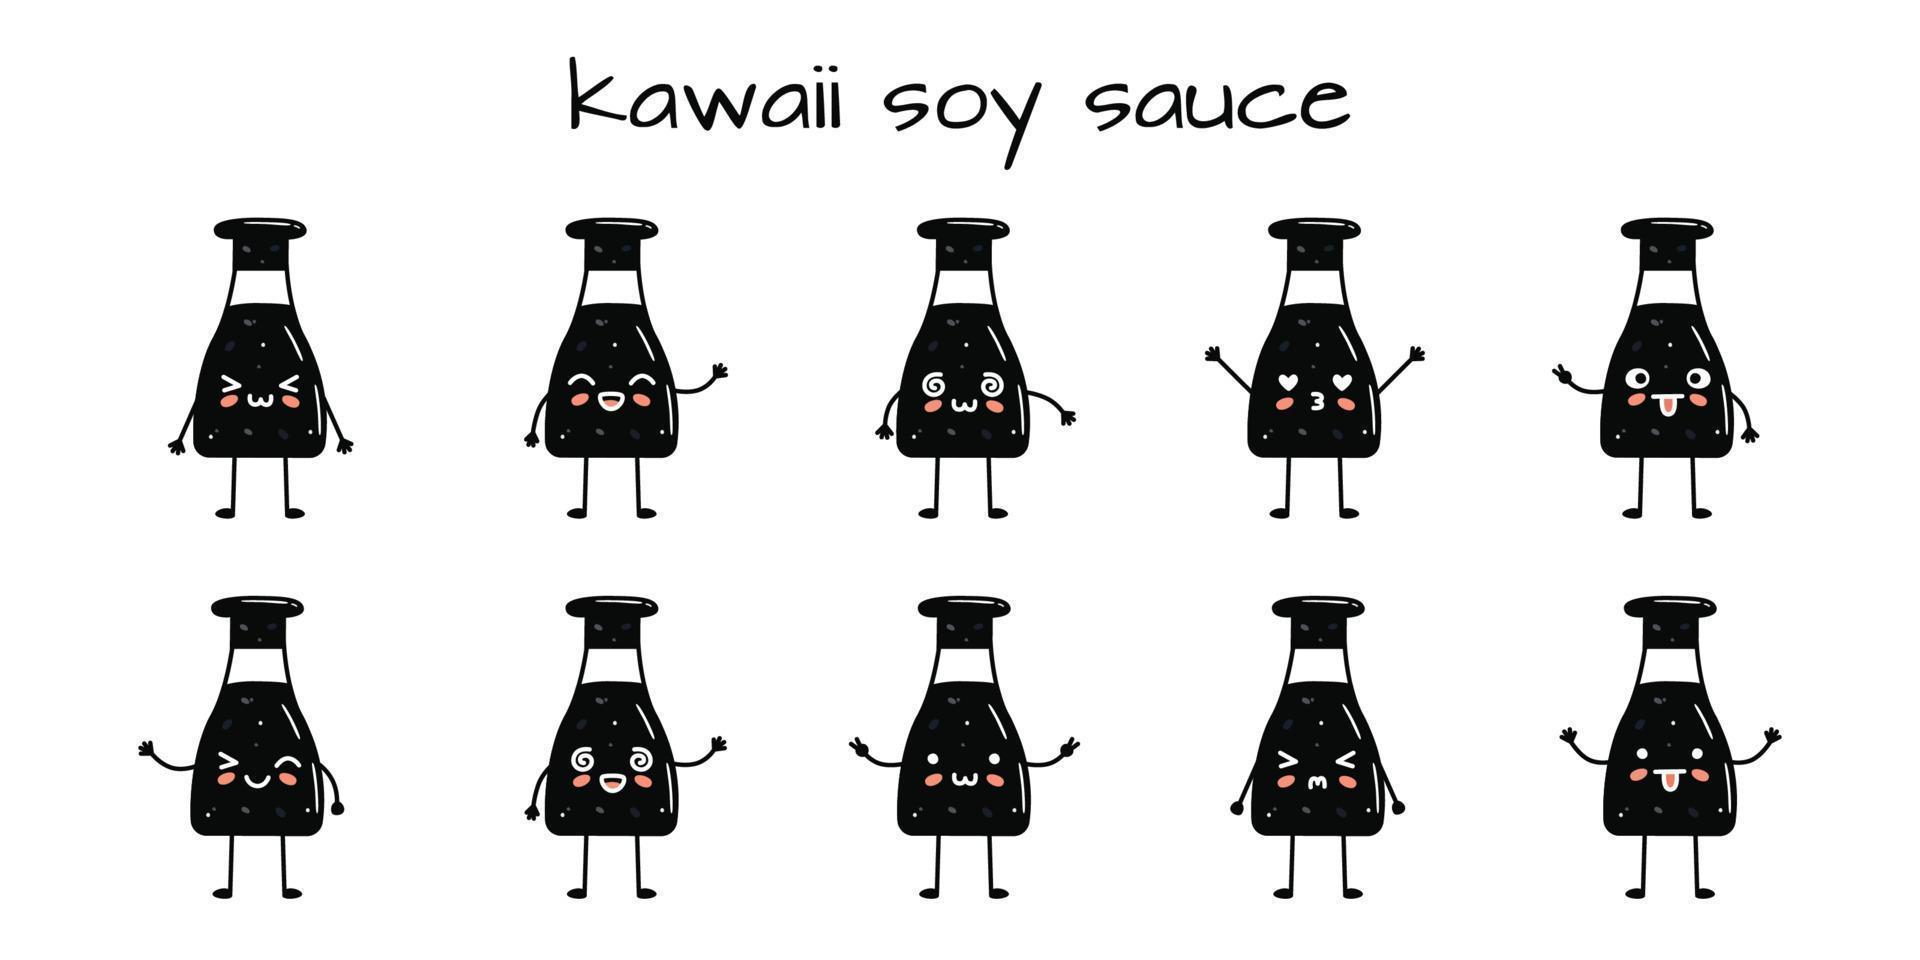 reeks van kawaii soja saus fles mascottes in tekenfilm stijl vector